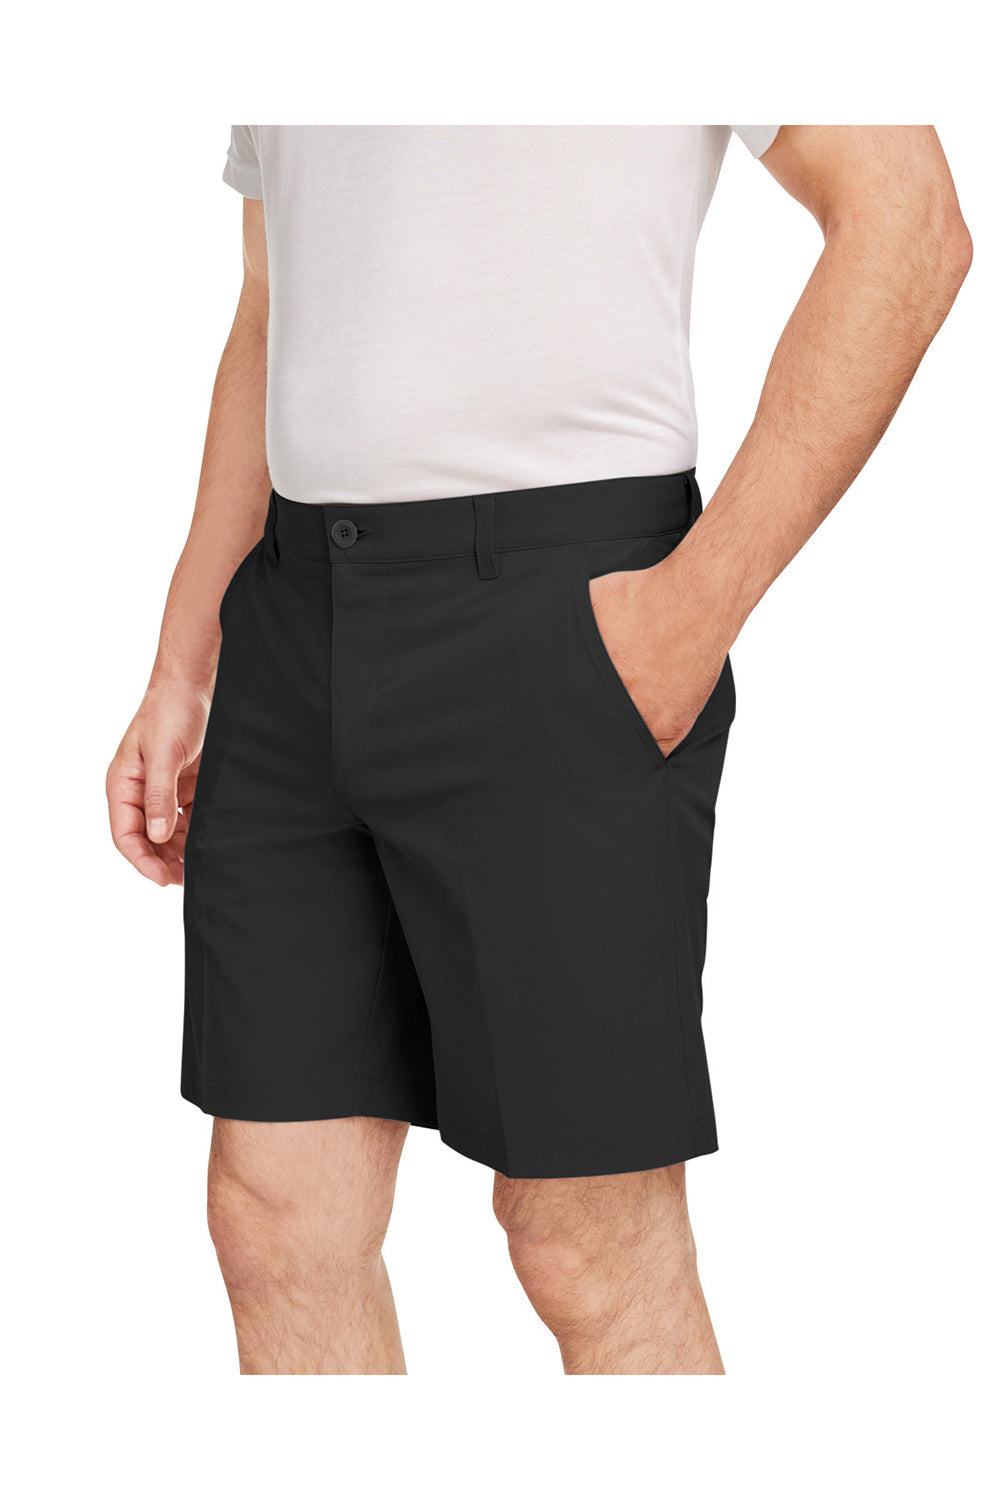 Swannies Golf SWS700 Mens Sully Shorts w/ Pockets Black 3Q